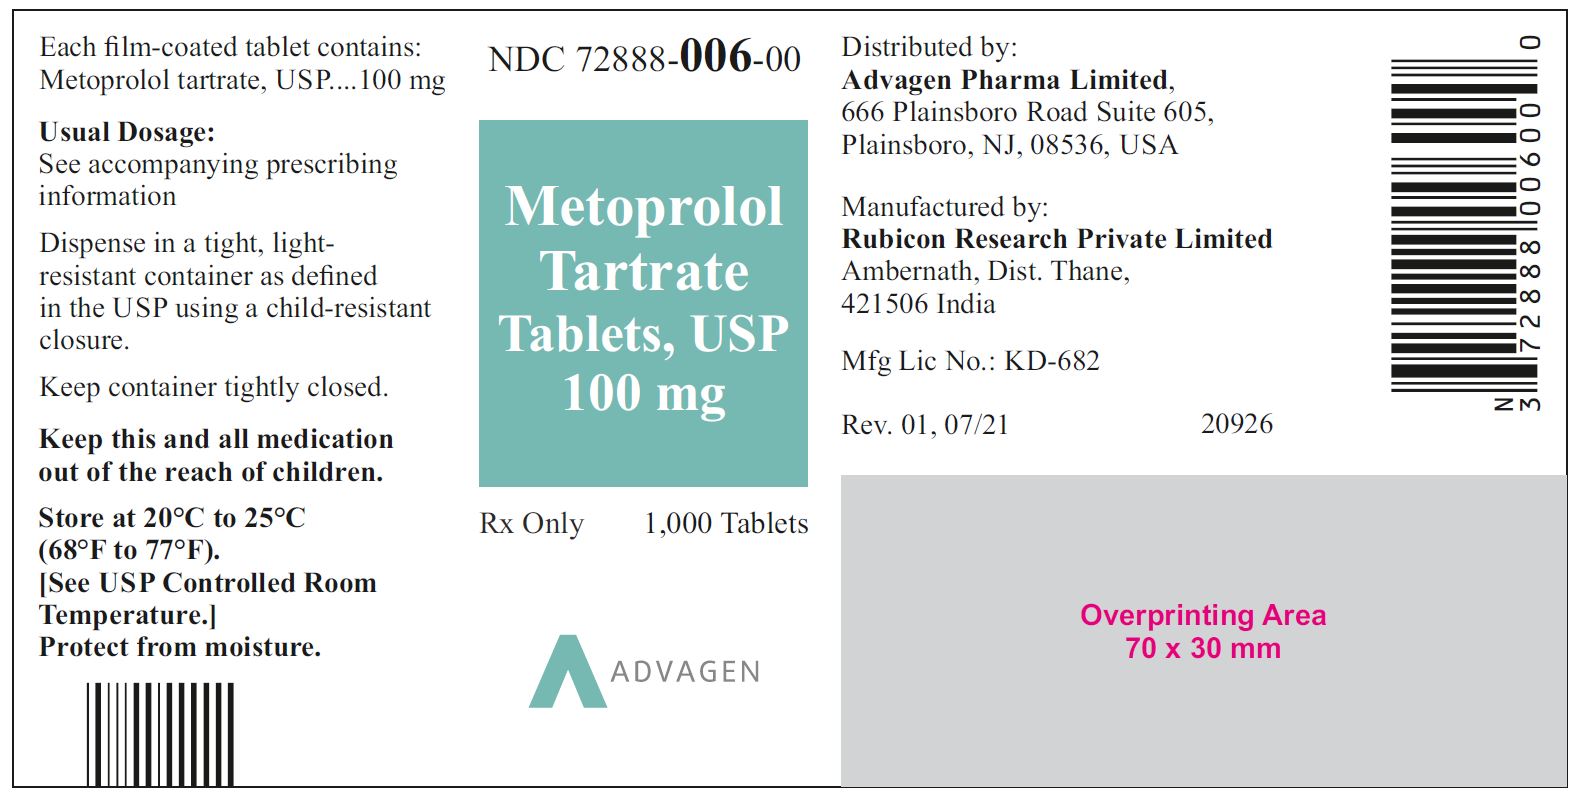 NDC 72888-006-00 - Metoprolol Tartrate Tablets, USP 100 mg - 1000 Tablets